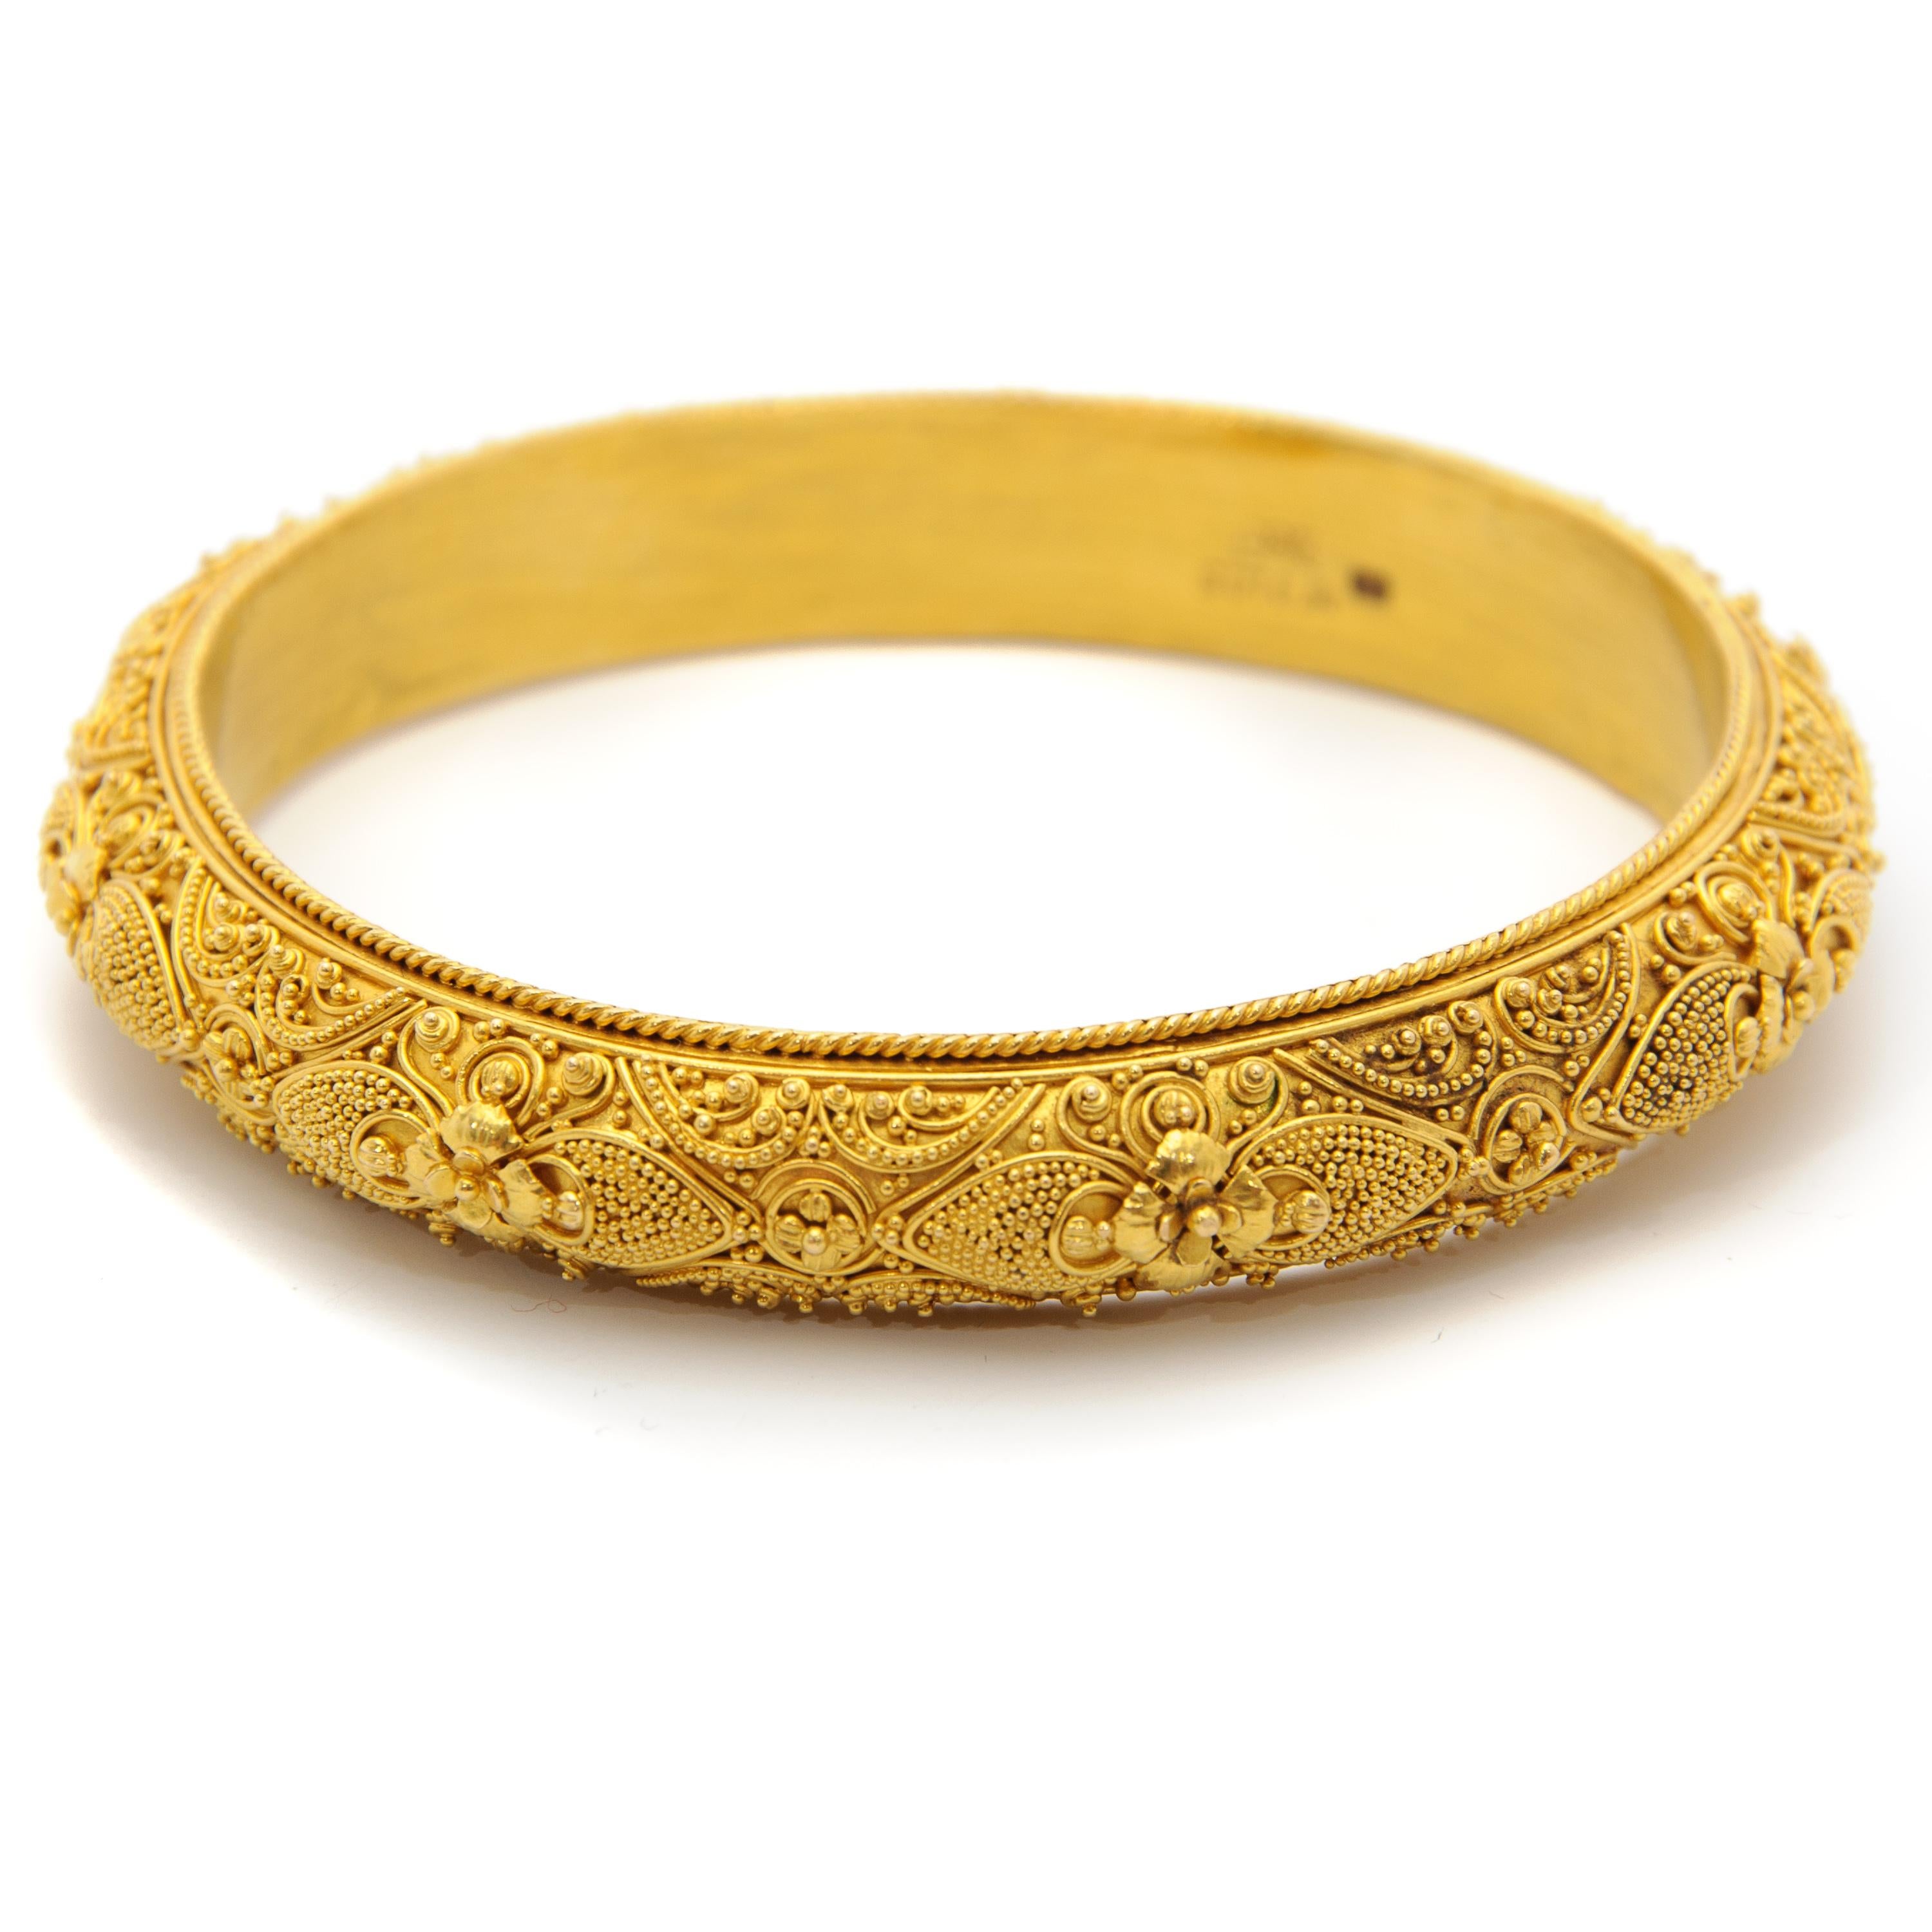 Contemporary 22 Karat Yellow Gold Etruscan Revival Filigree Bangle Bracelet